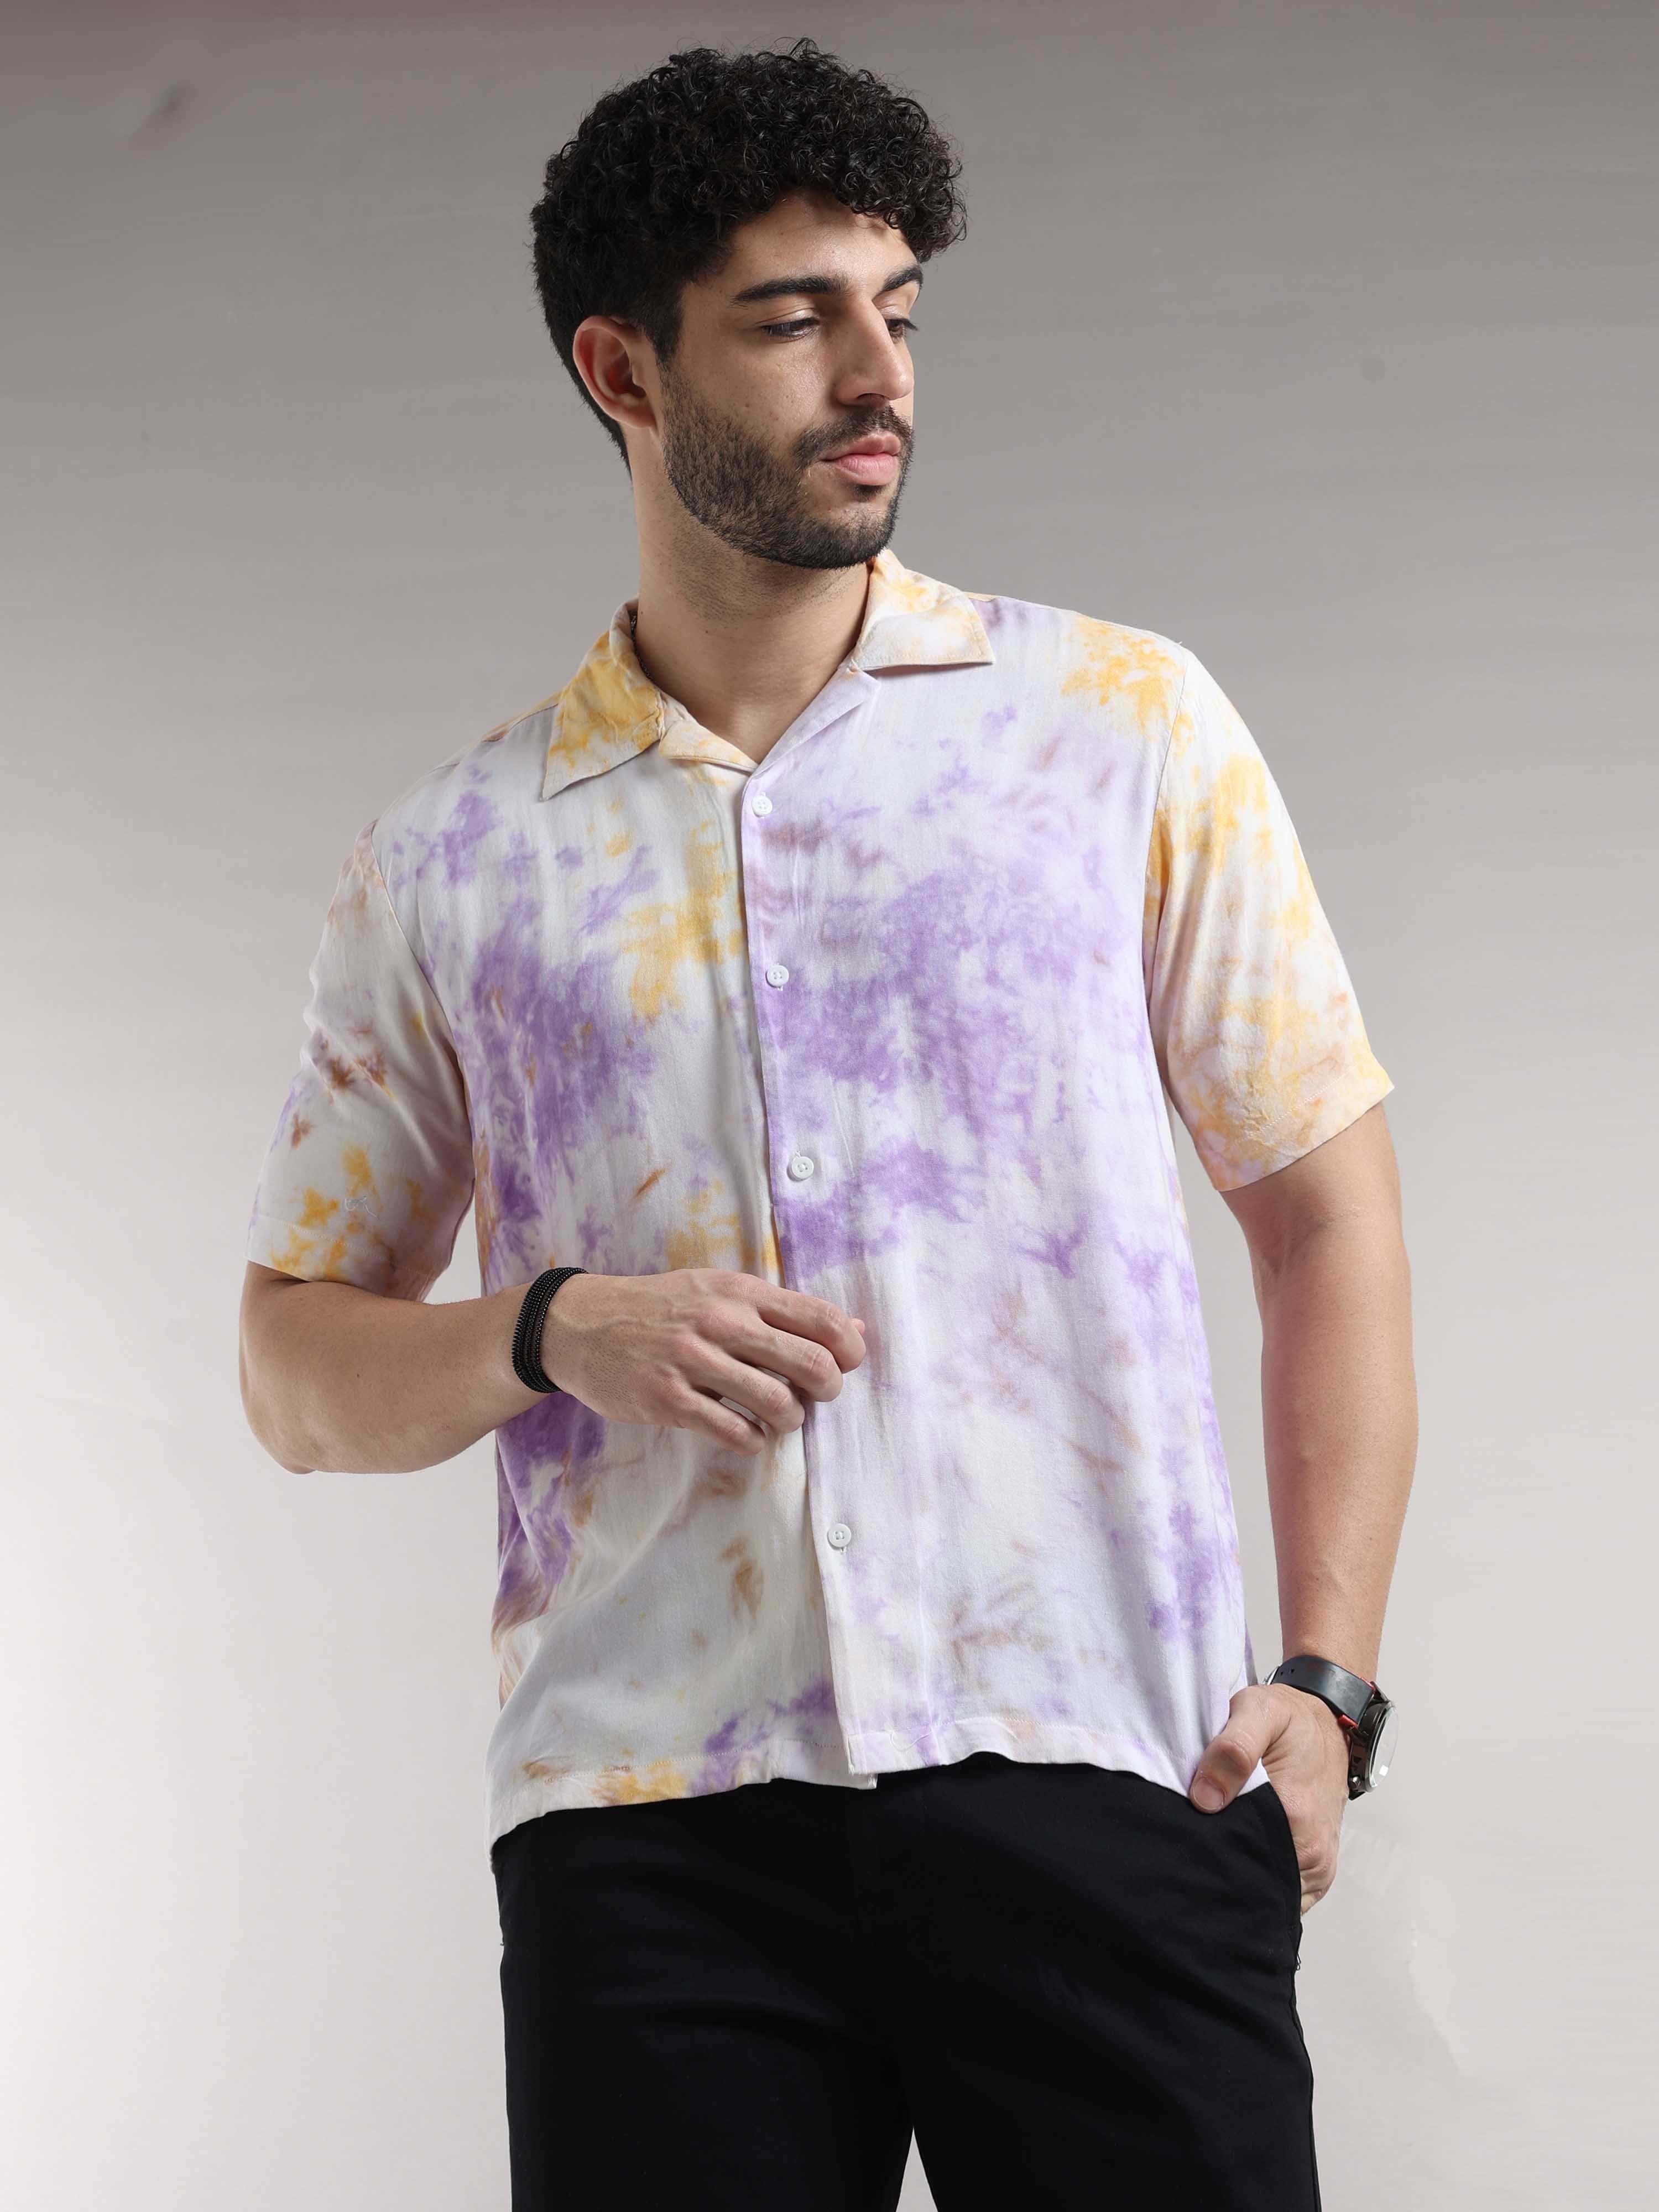 Men's Rayon Shirts, Shop Online